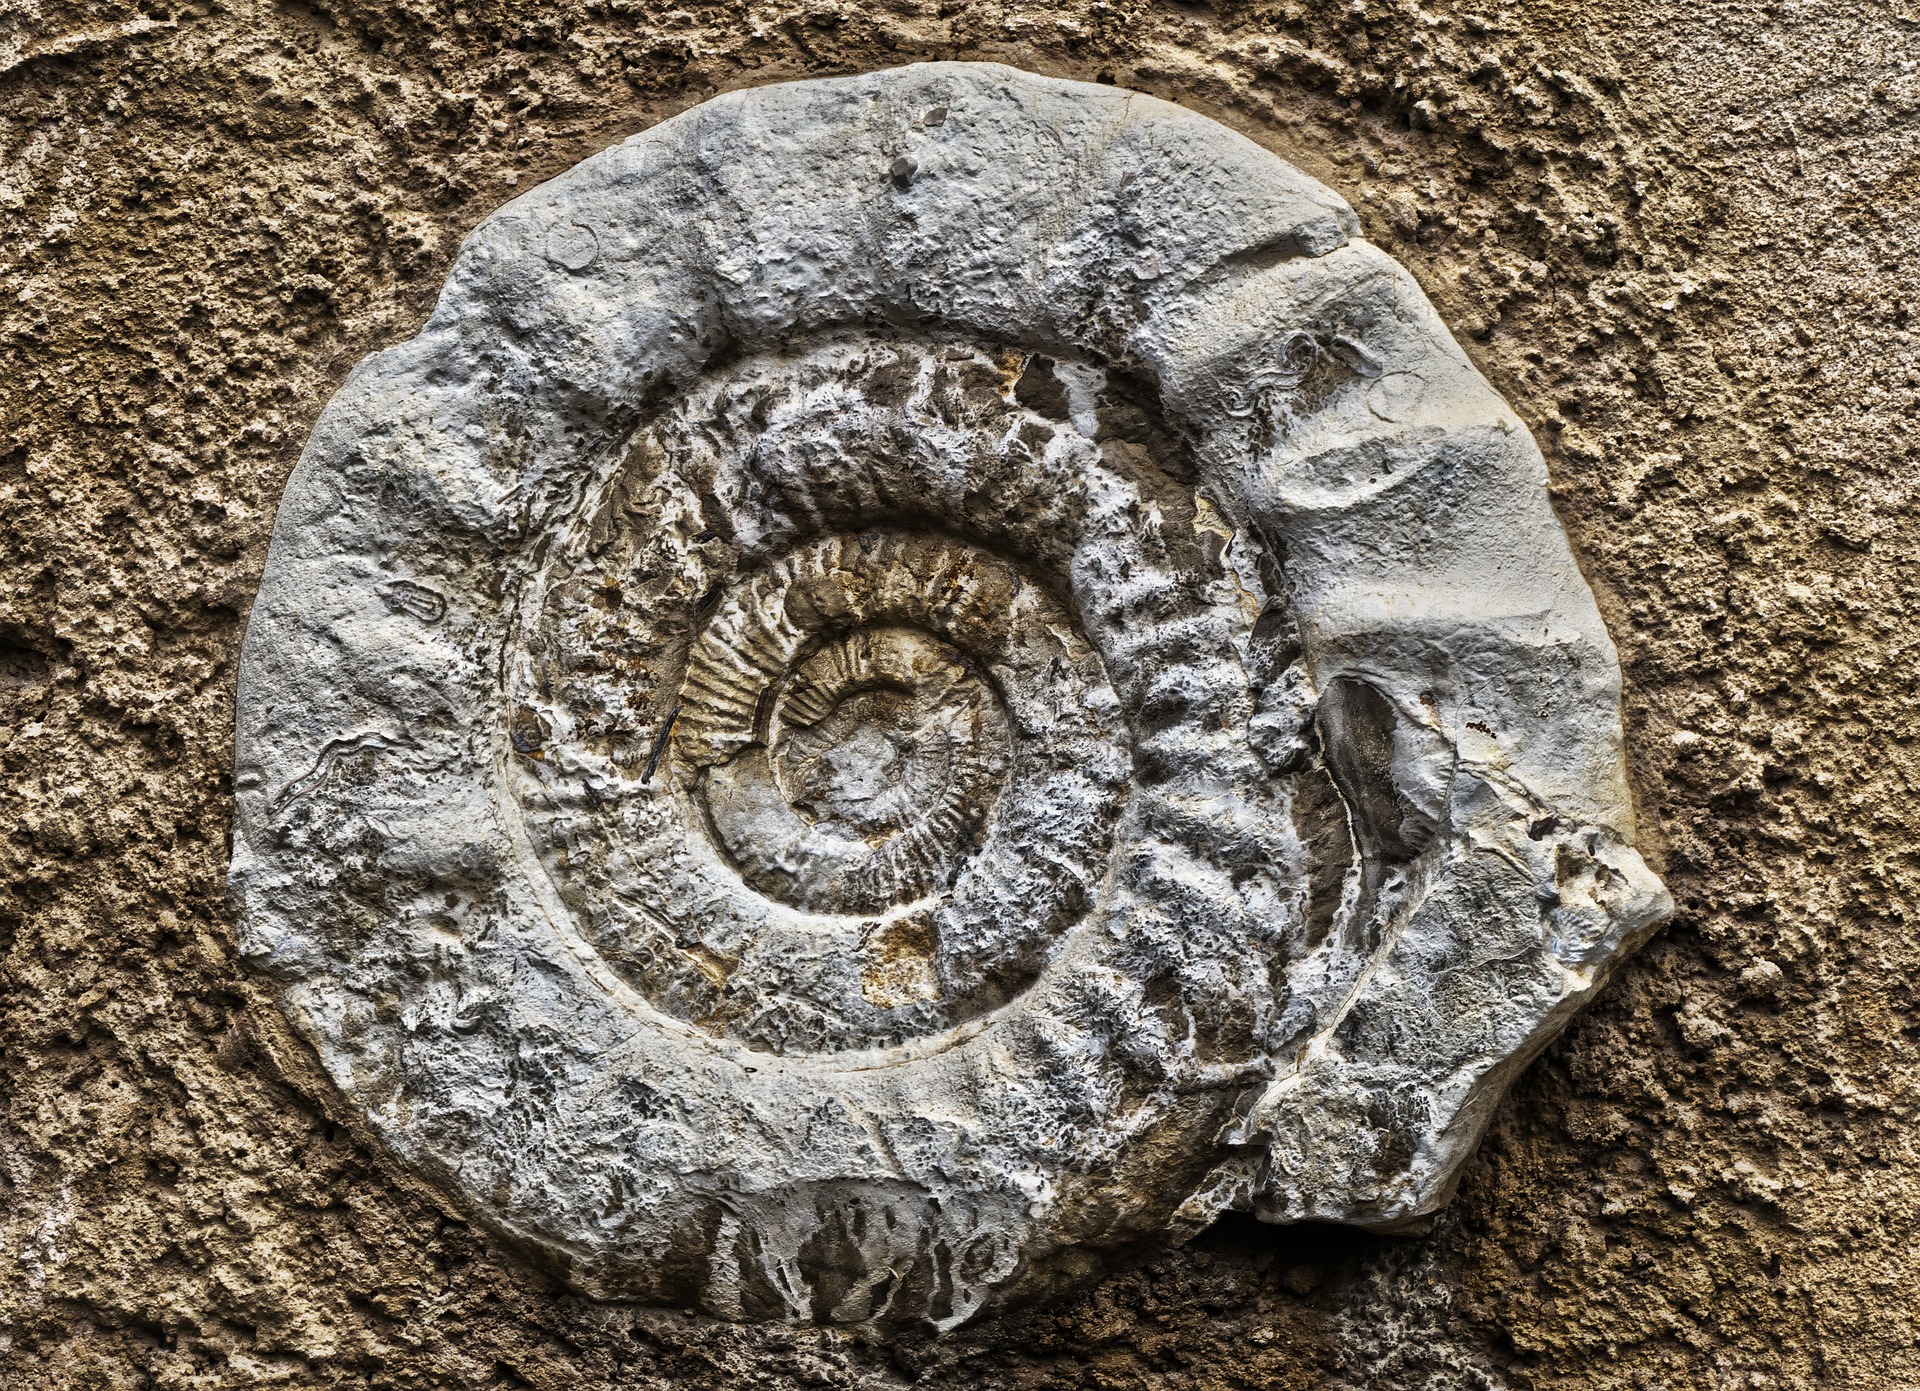 Ammonite fossil to illustrate ancient origins of animal skeletal system